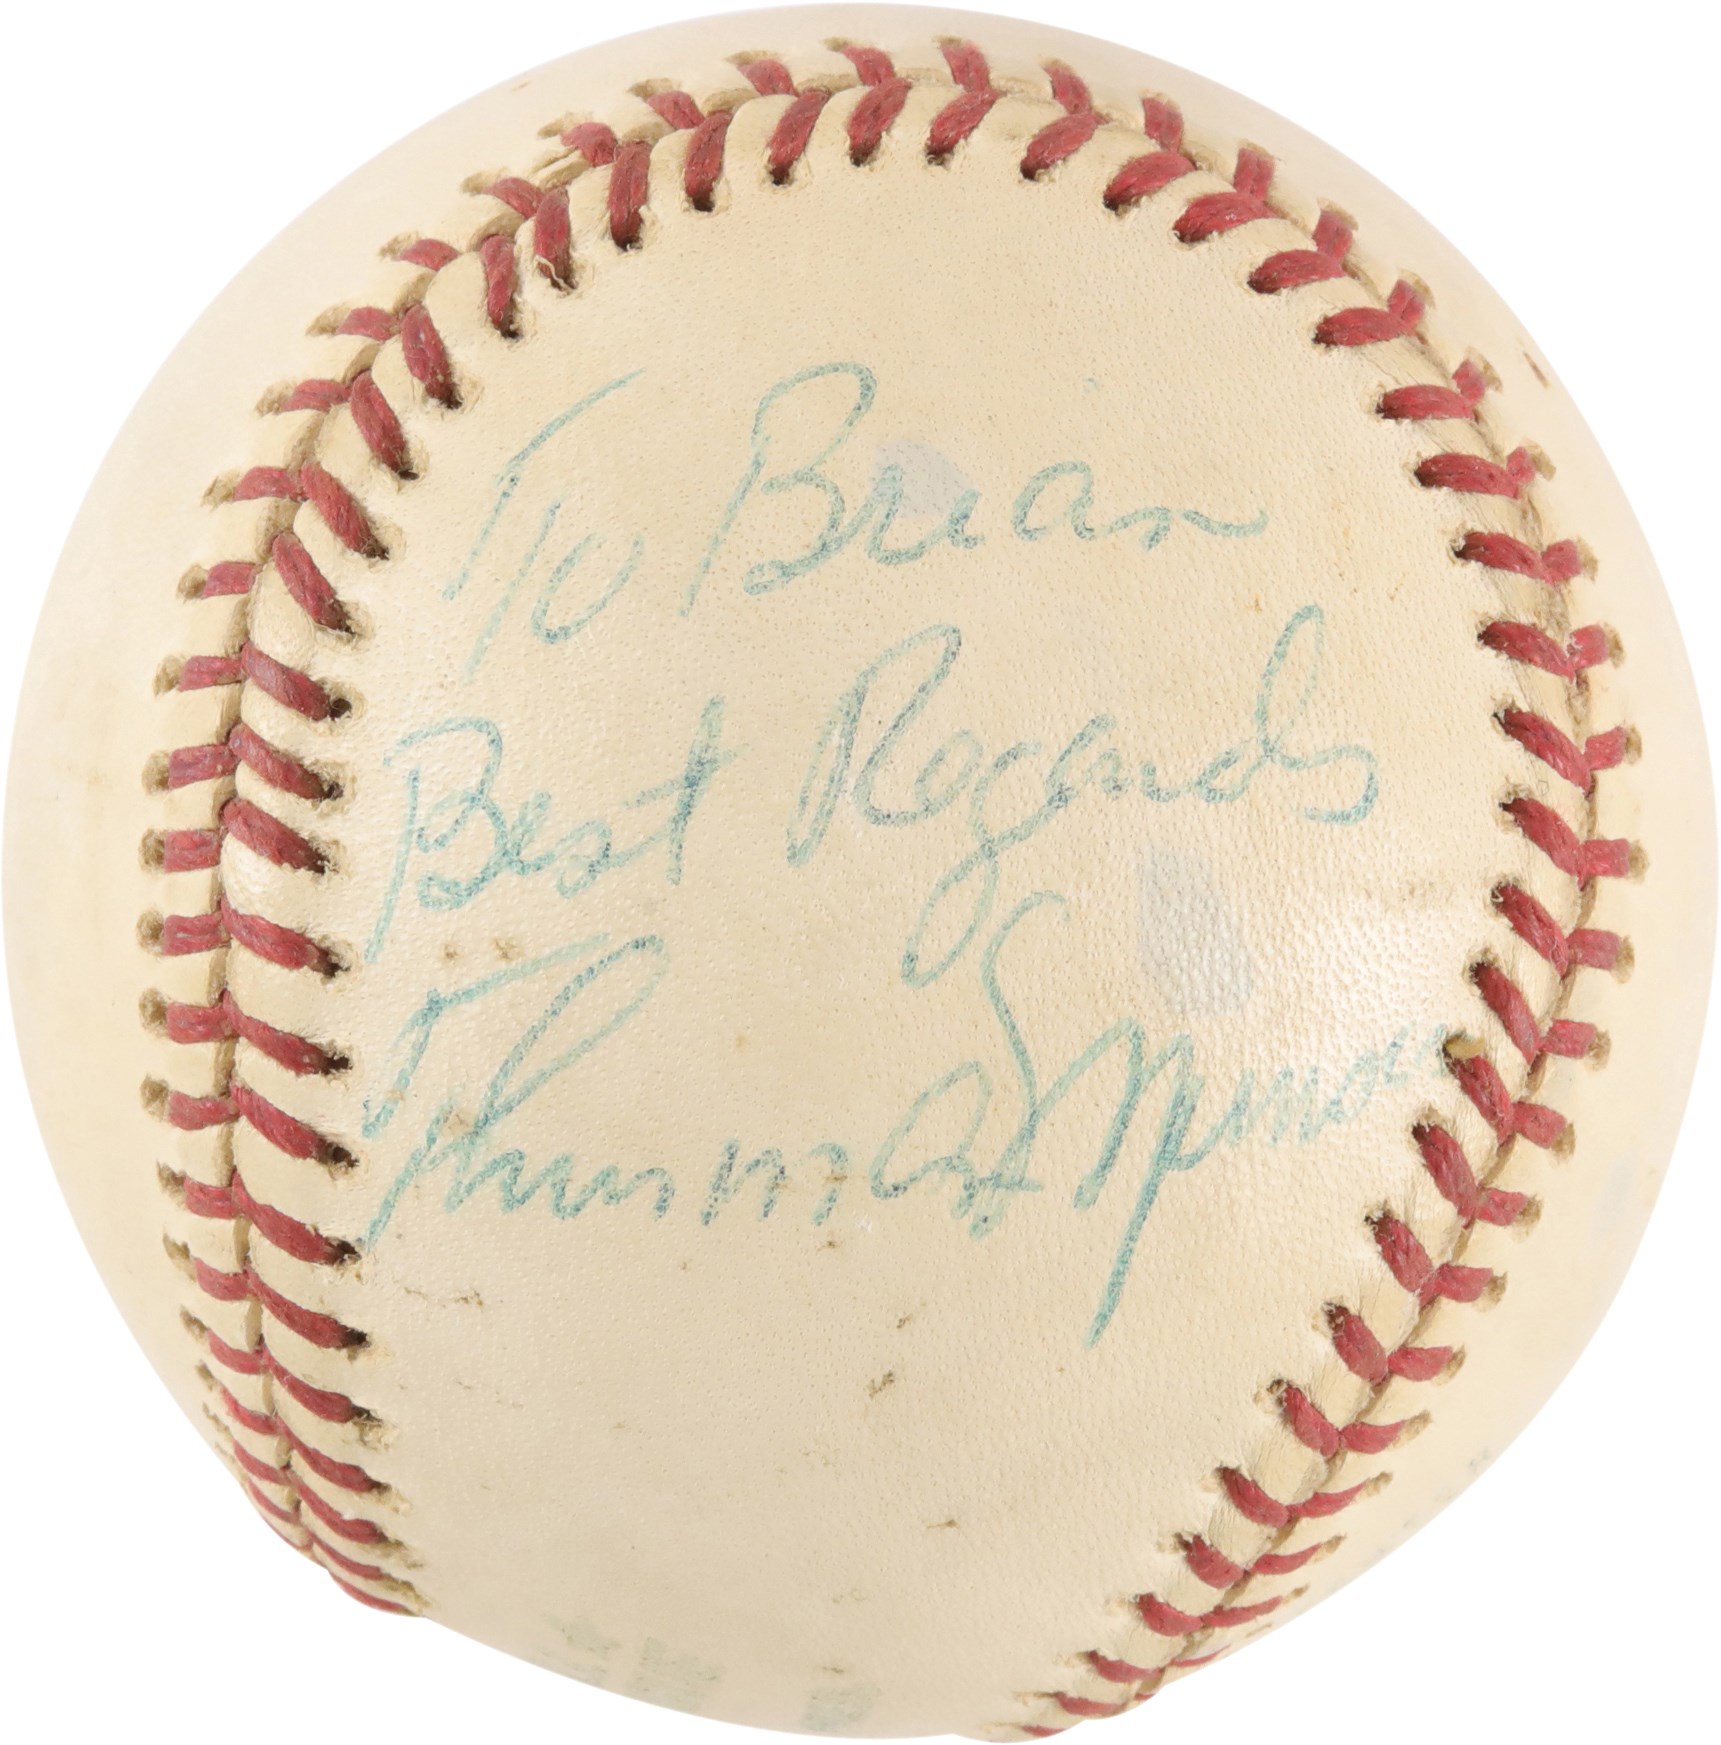 Baseball Autographs - 1976 Thurman Munson "To Brian" Single-Signed Baseball (PSA)